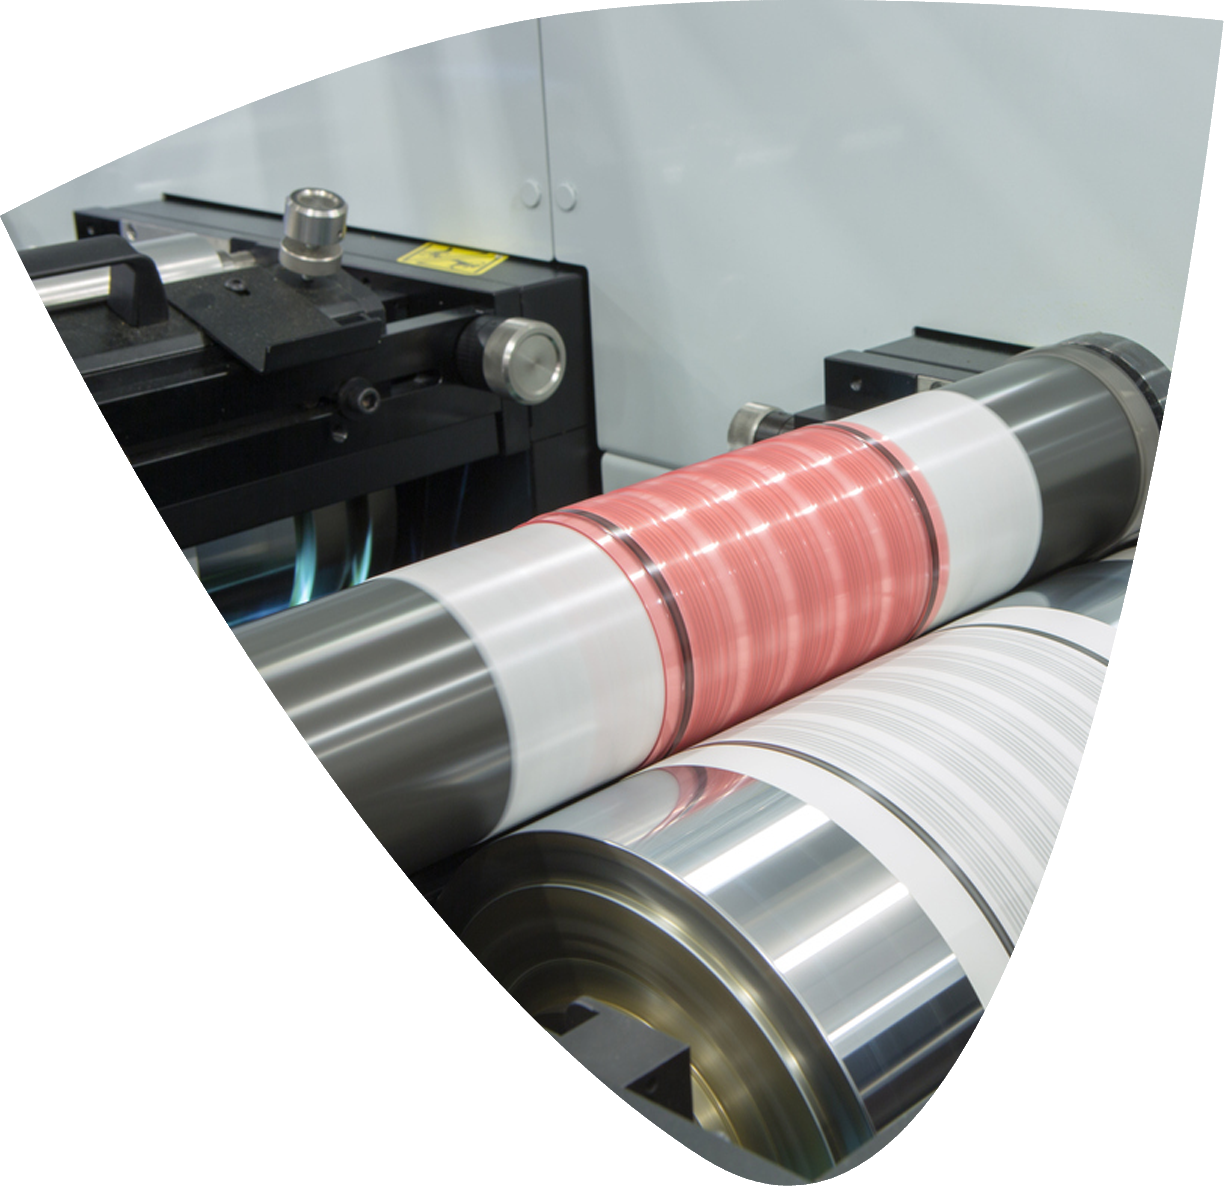 Flexography printing press | Maintenance and repair services | Veritek